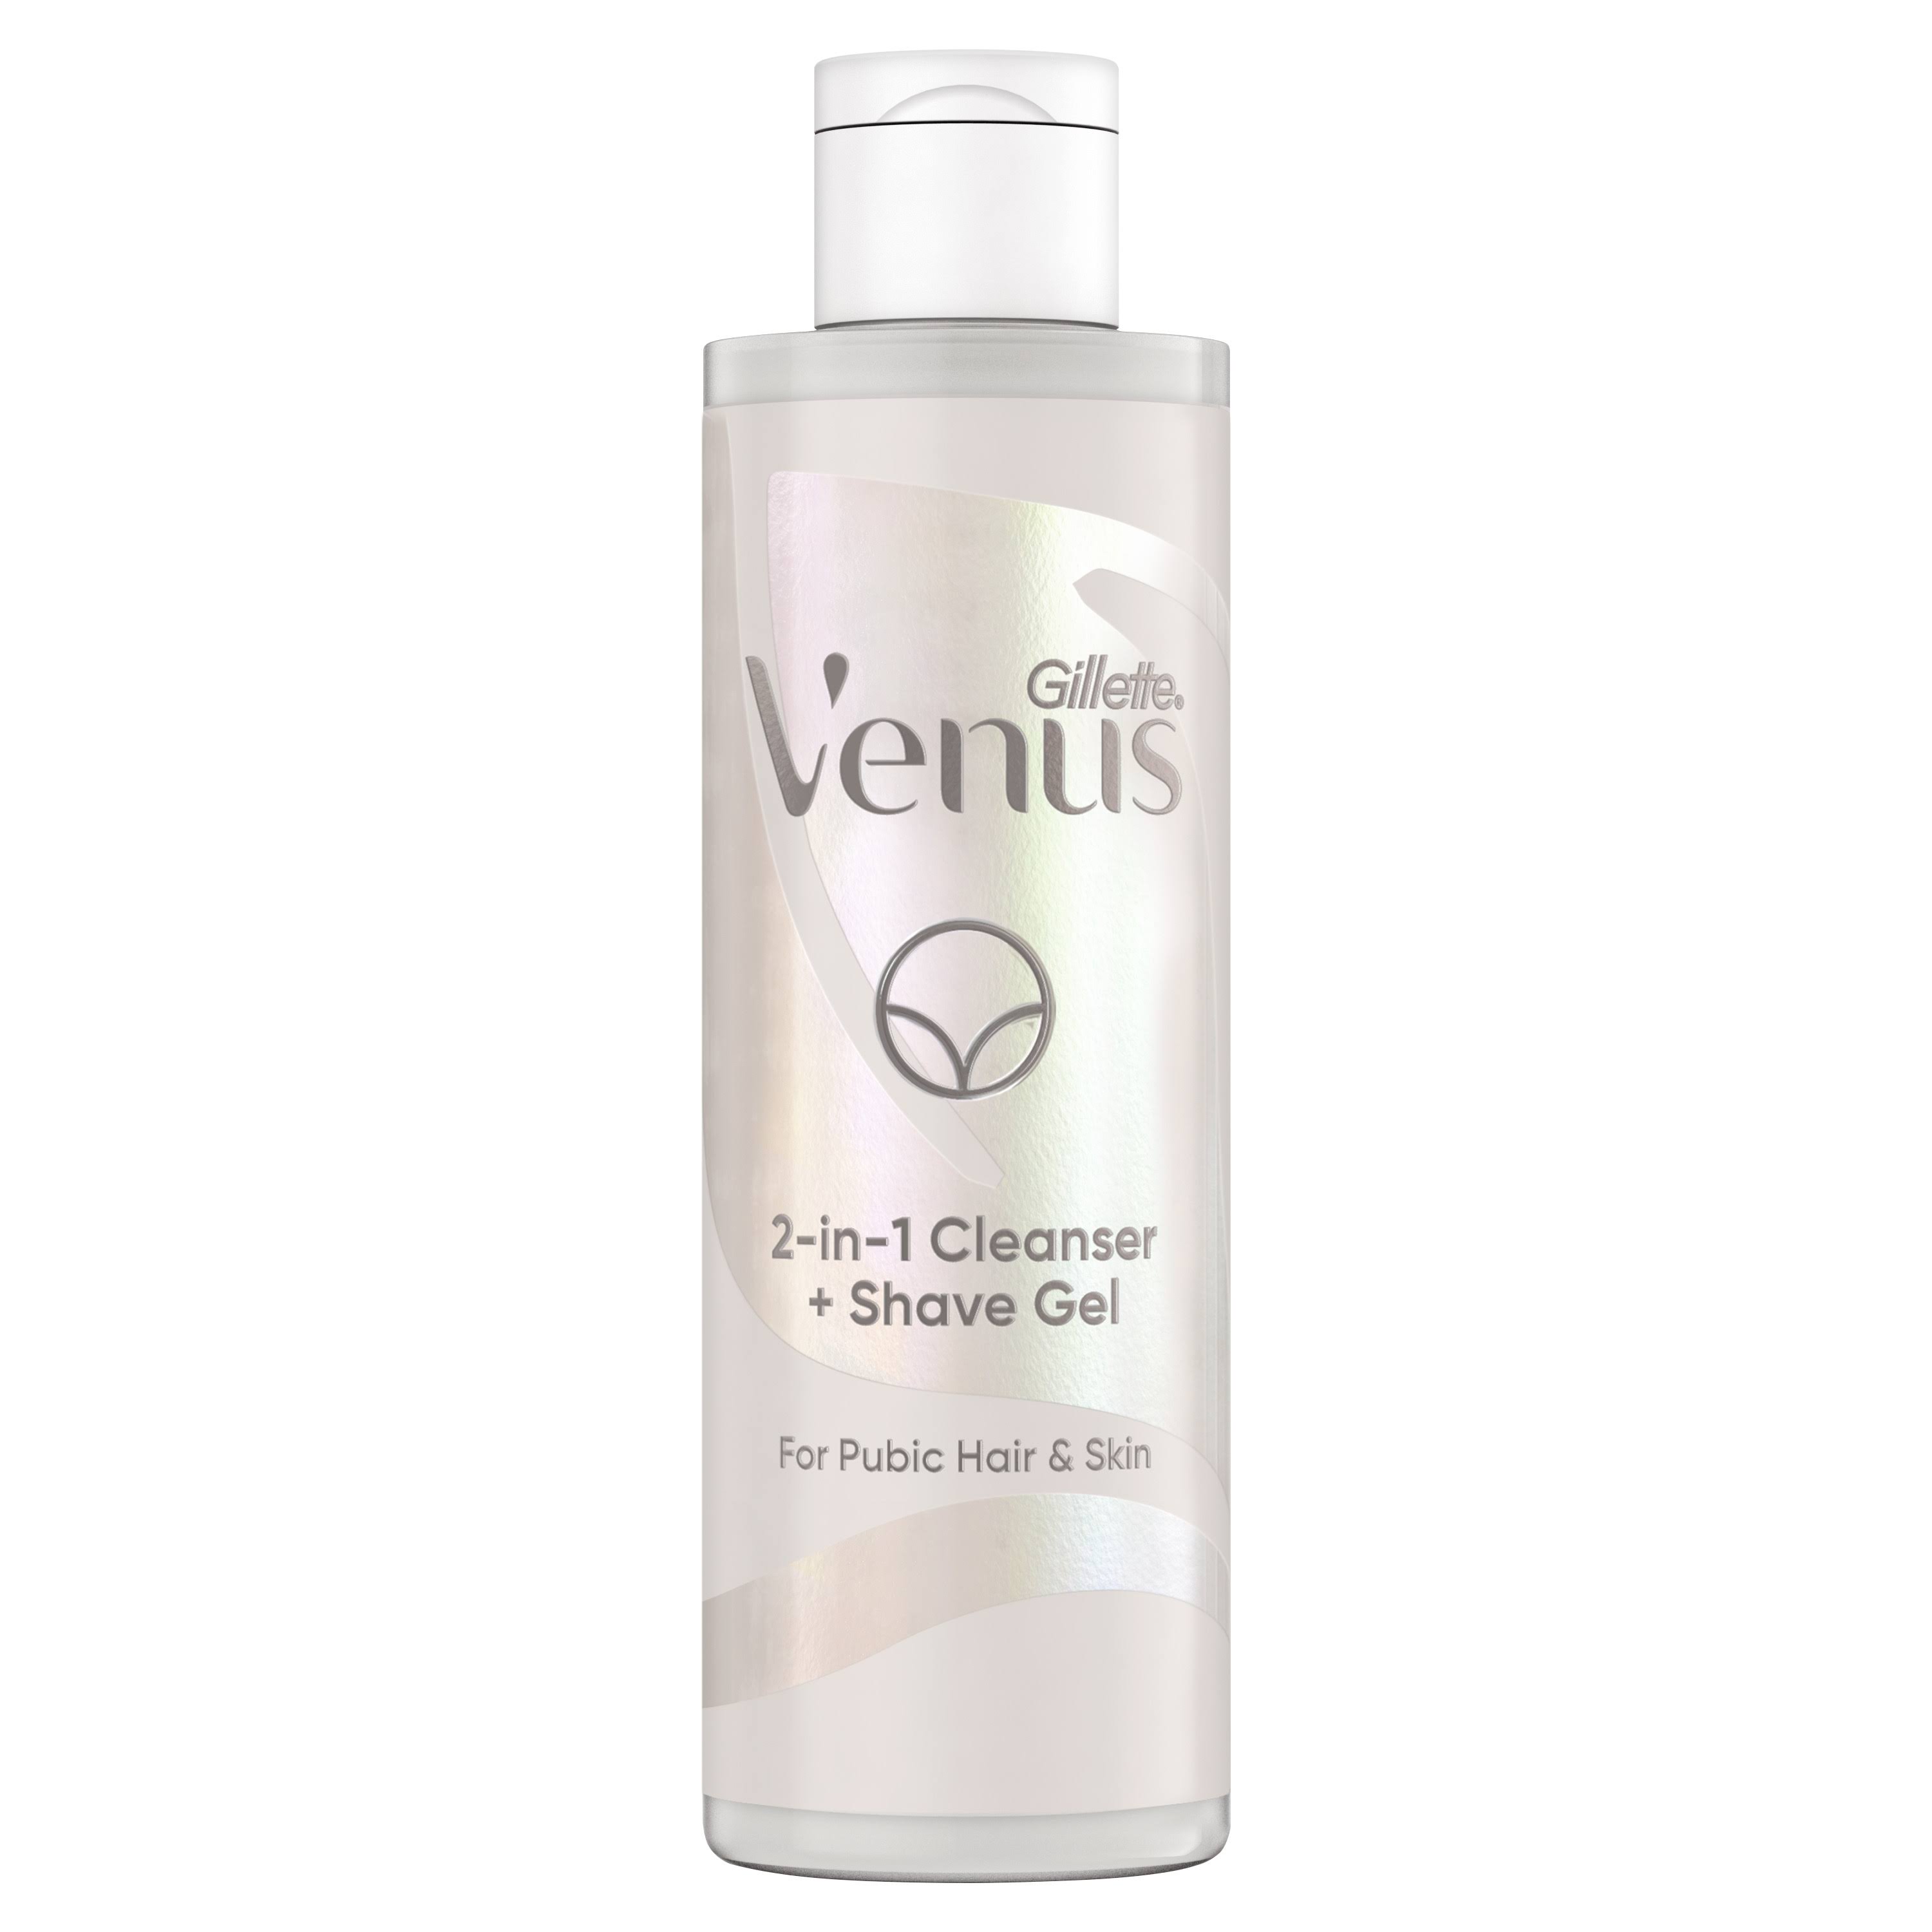 Gillette Venus Cleanser & Shave Gel, 2-in-1 - 190 ml